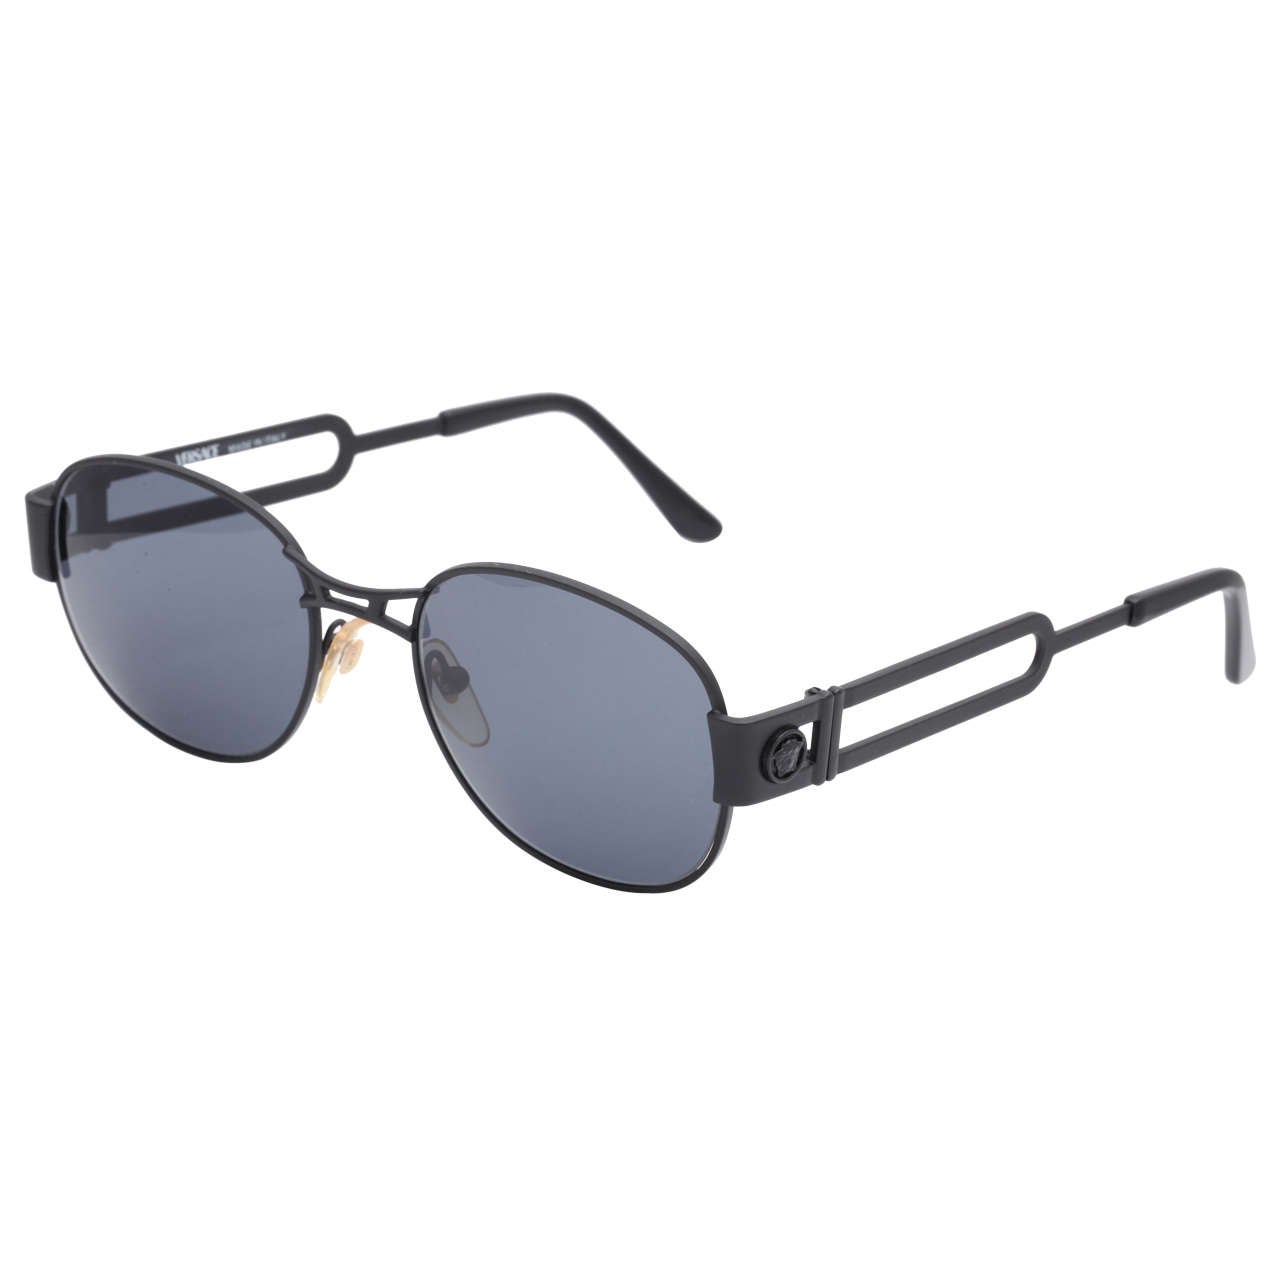 Gianni Versace Vintage Sunglasses Mod S57 Col 028 For Sale